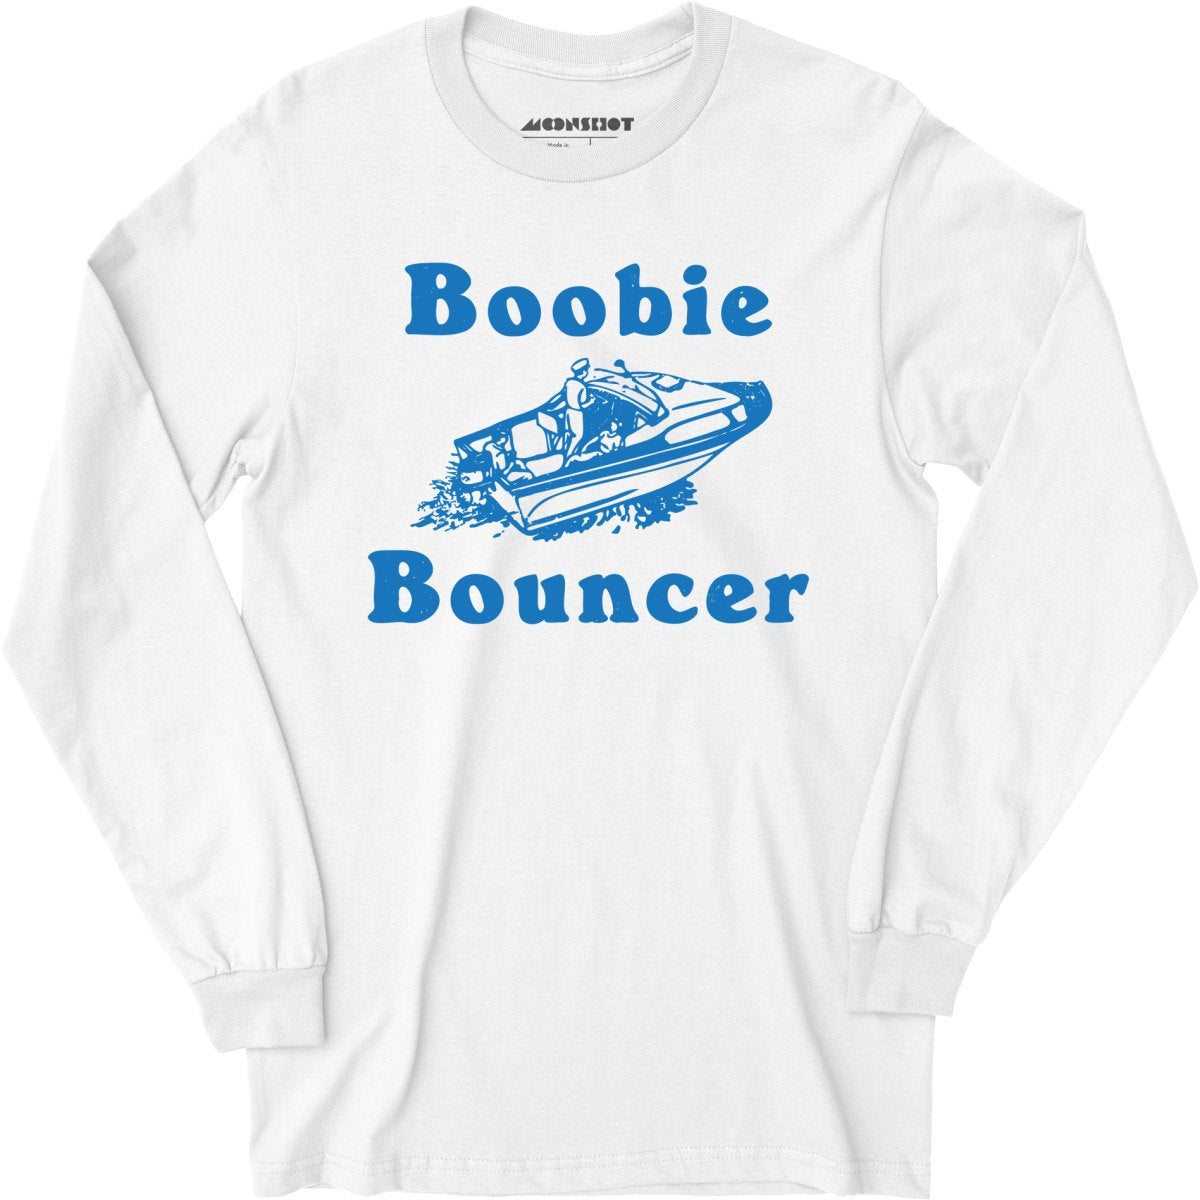 Boobie Bouncer - Long Sleeve T-Shirt